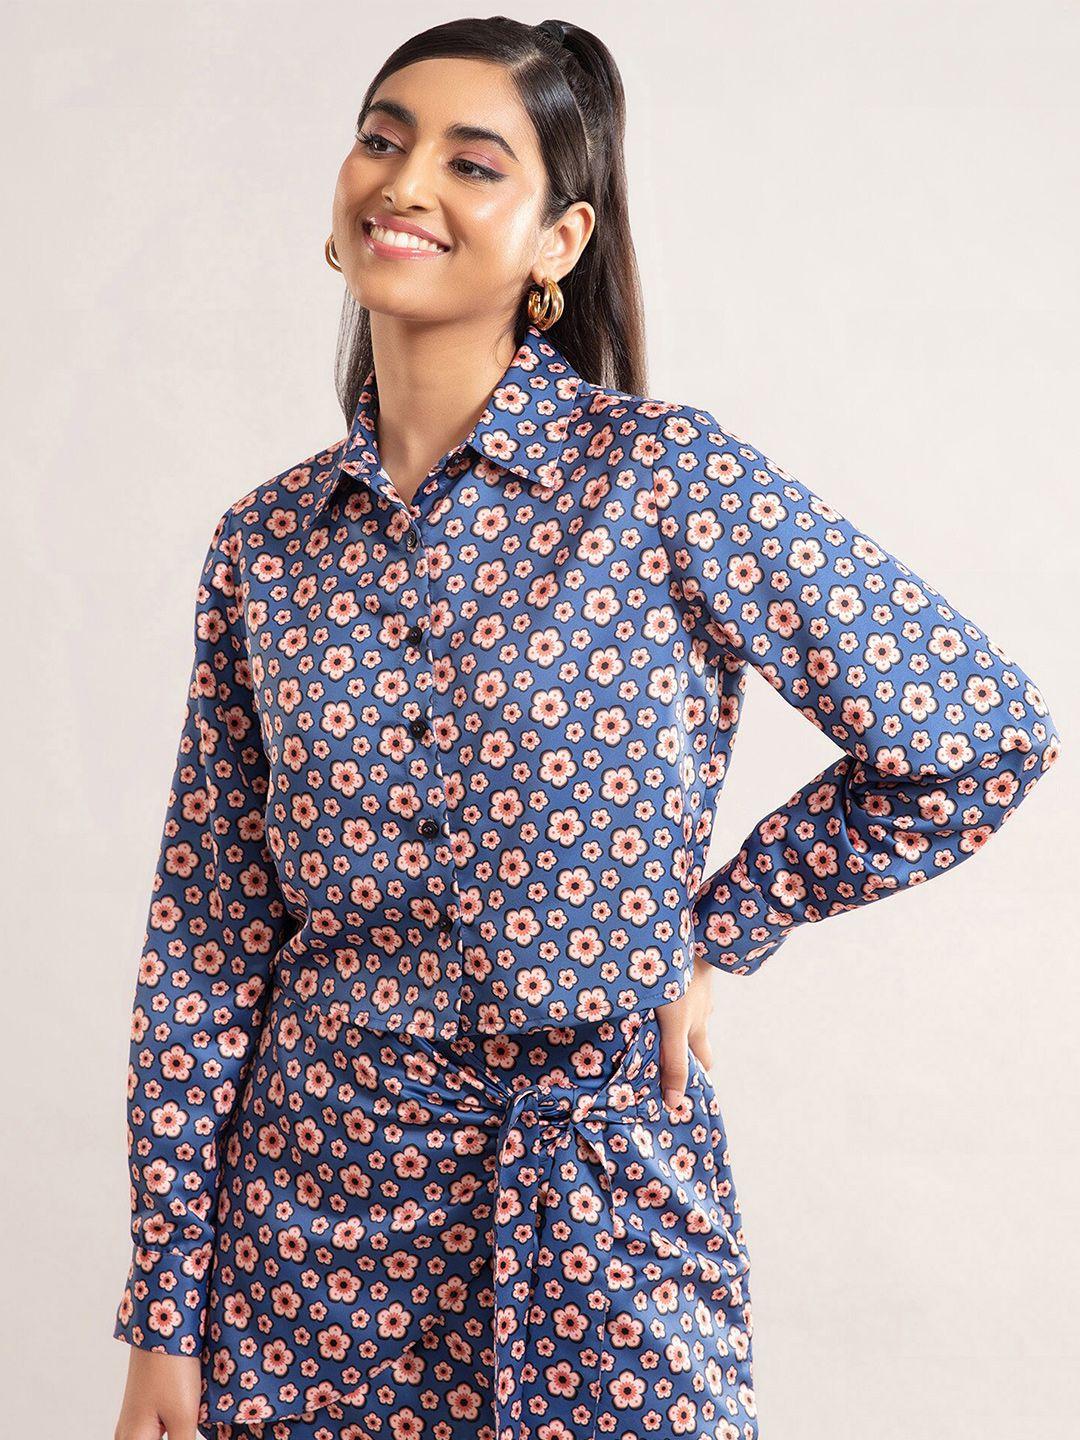 20dresses women blue regular fit floral printed casual shirt